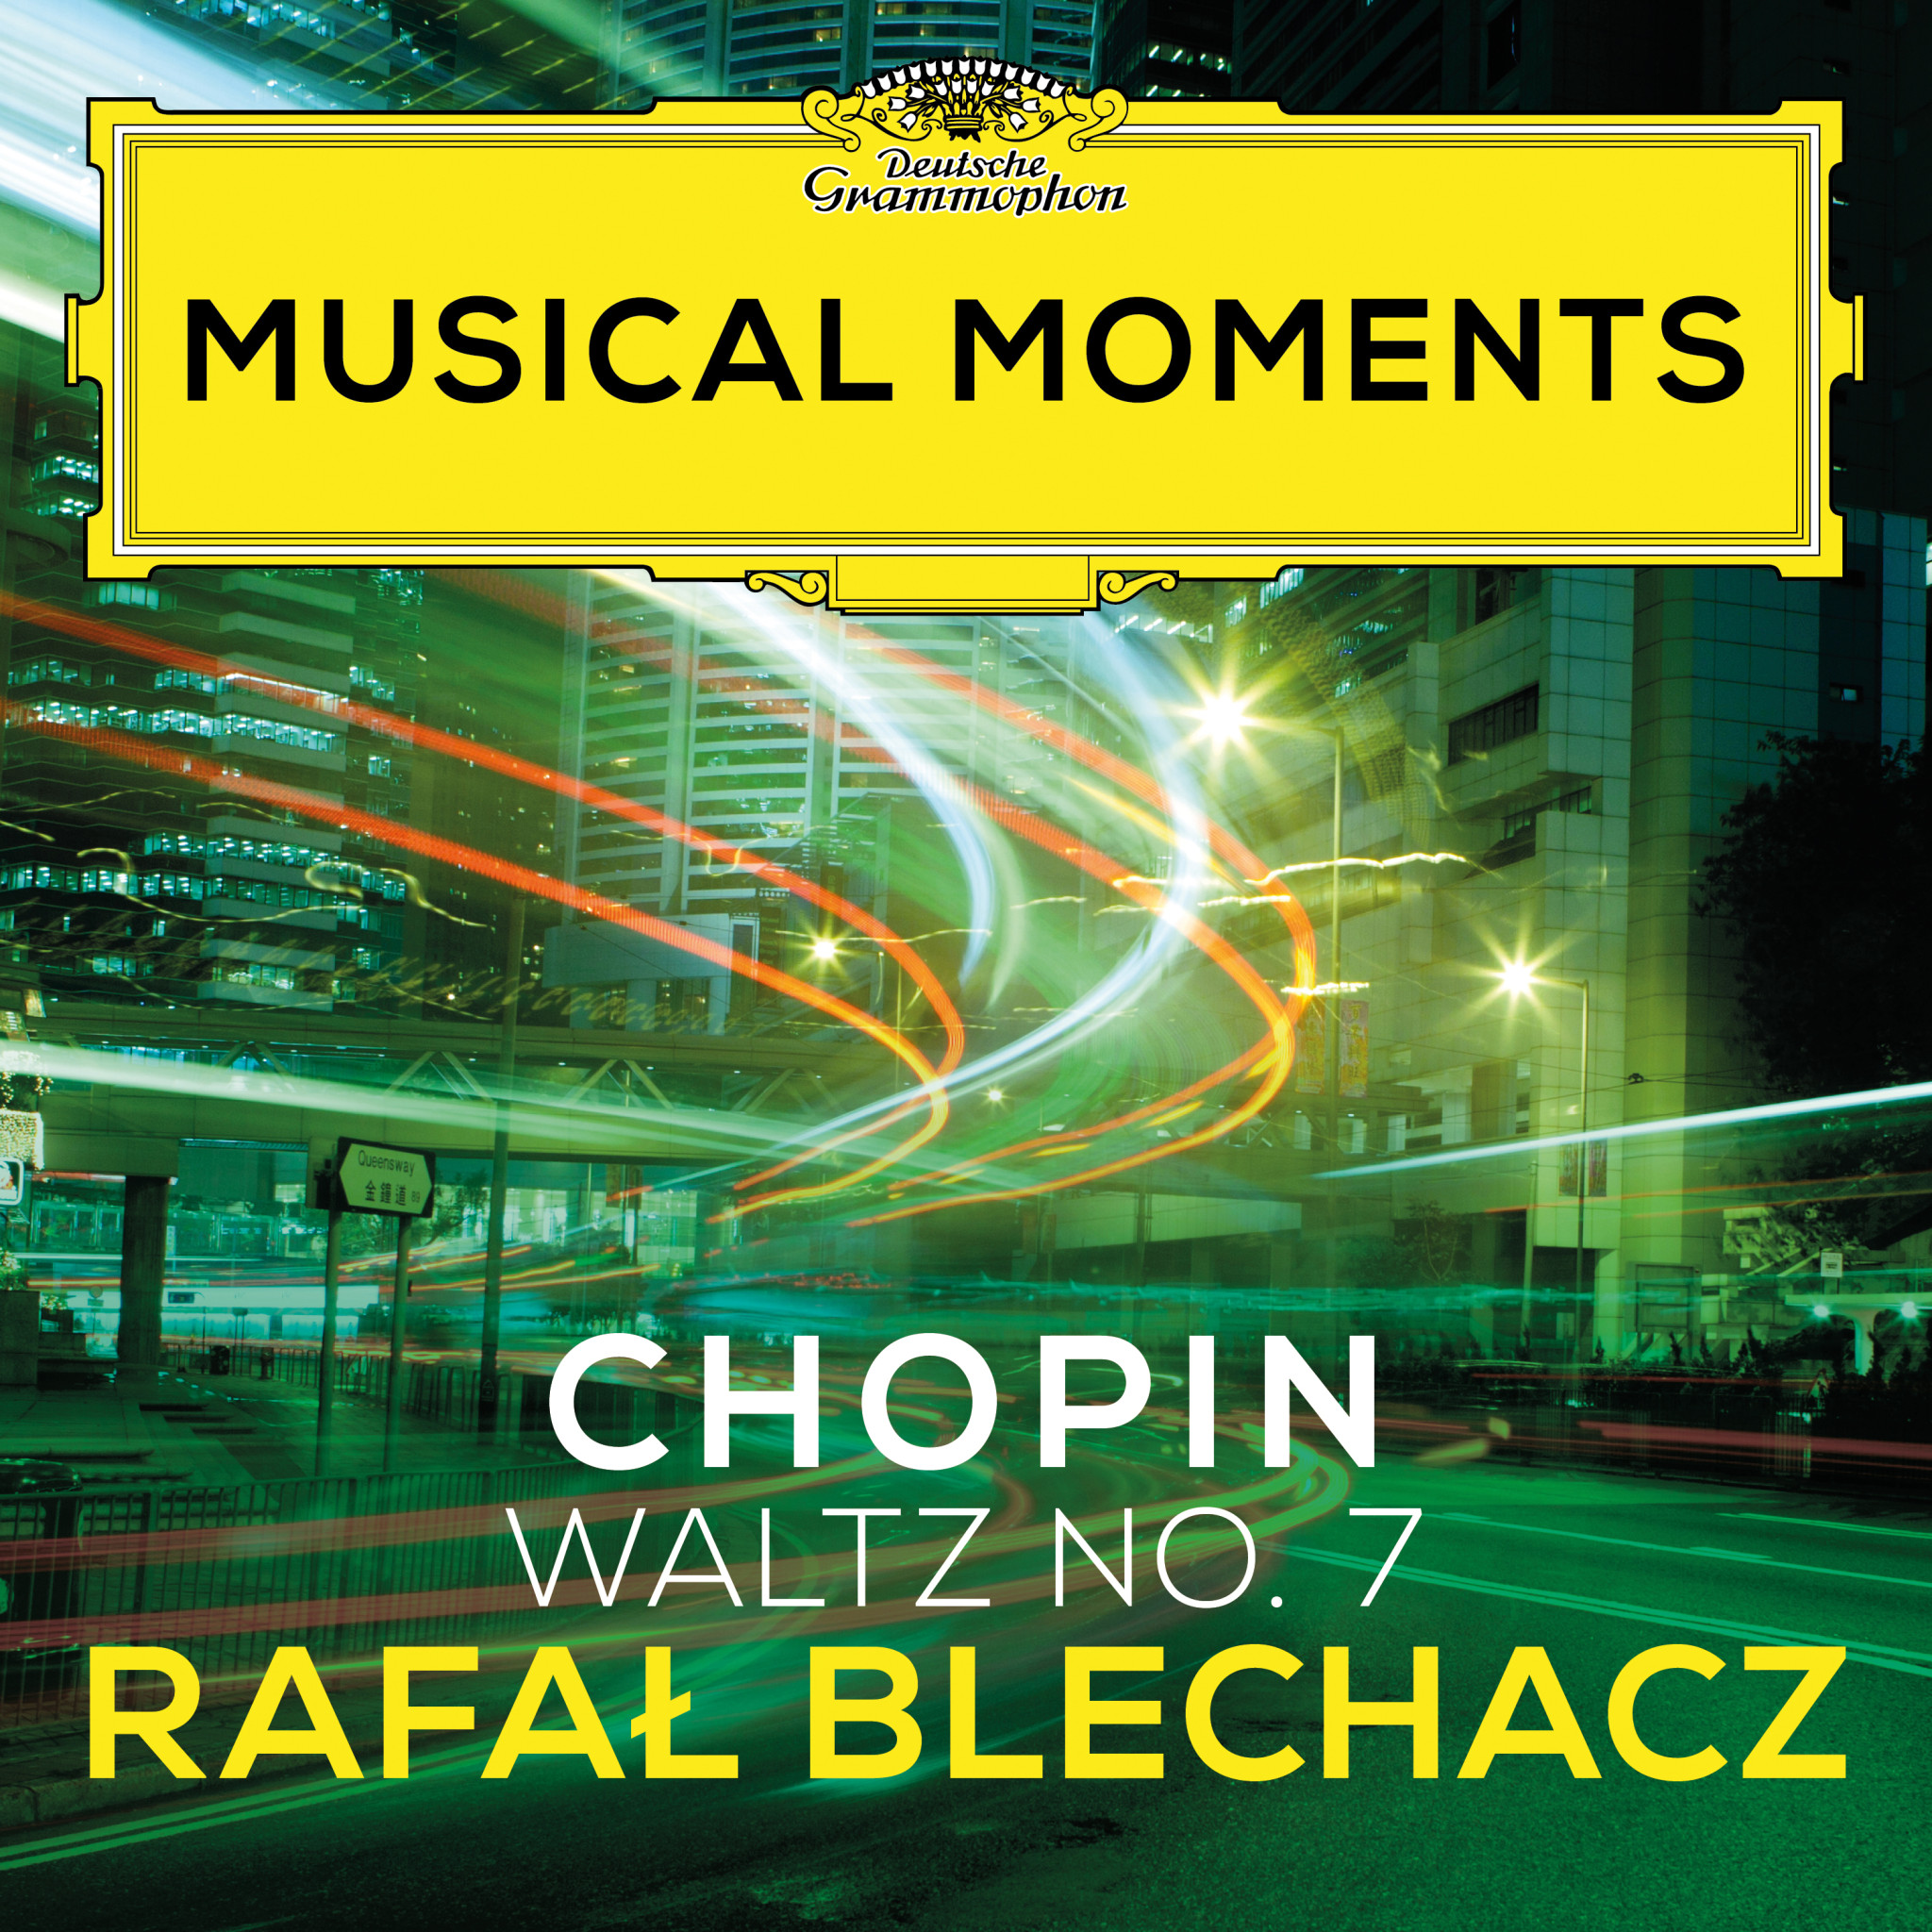 Rafał Blechacz - Frédéric Chopin: Waltz No. 7 in C-Sharp Minor, Op. 64 No. 2 